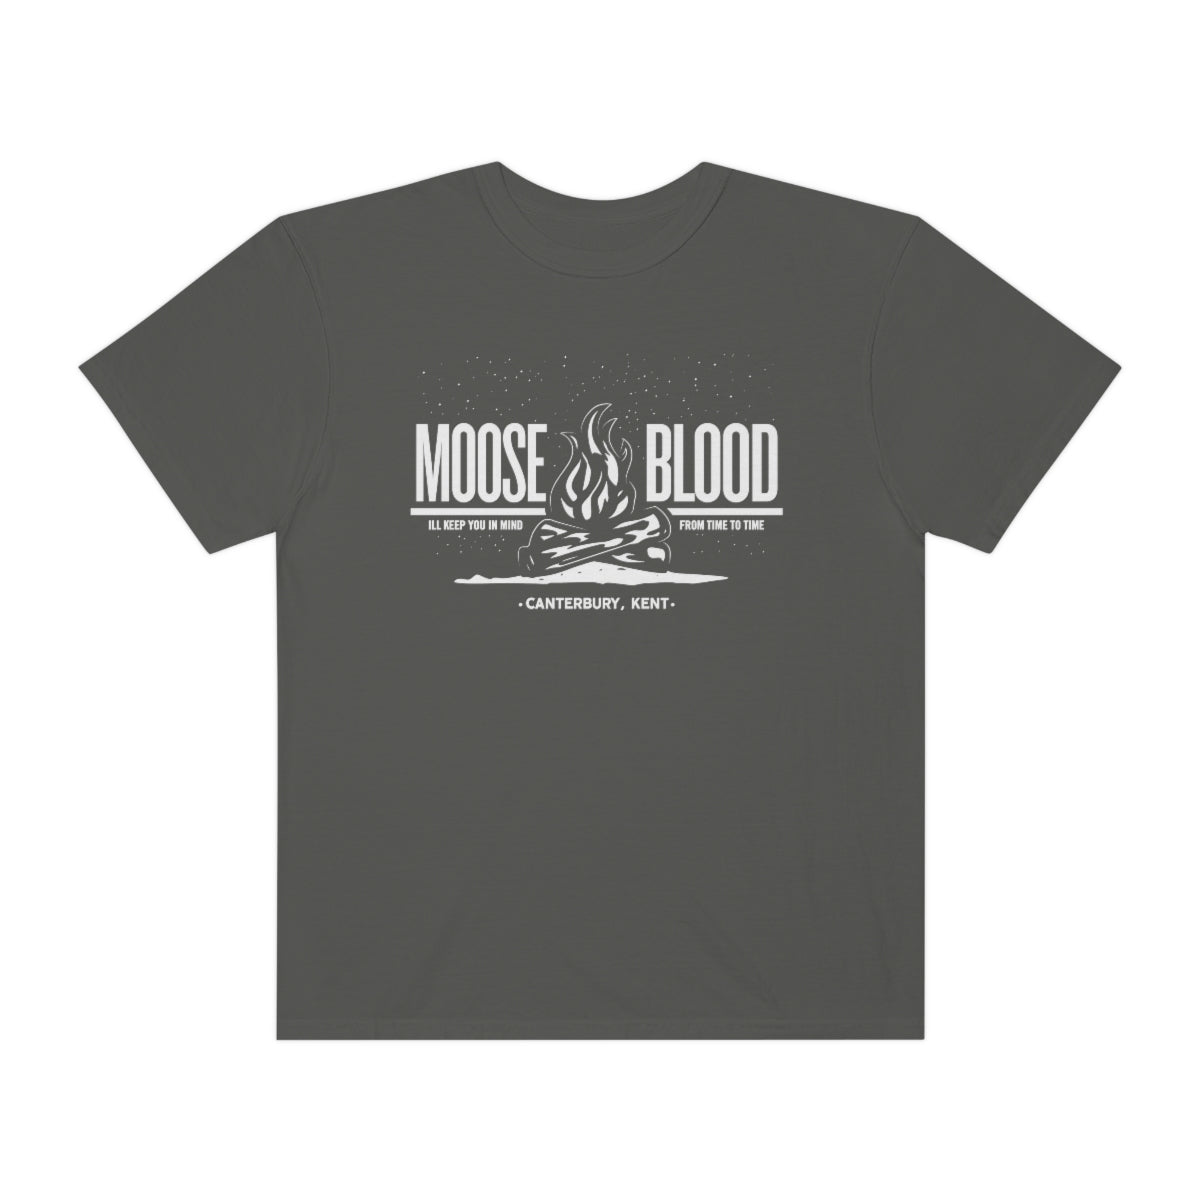 Campfire Shirt - NO SLEEP RECORDS - Moose Blood